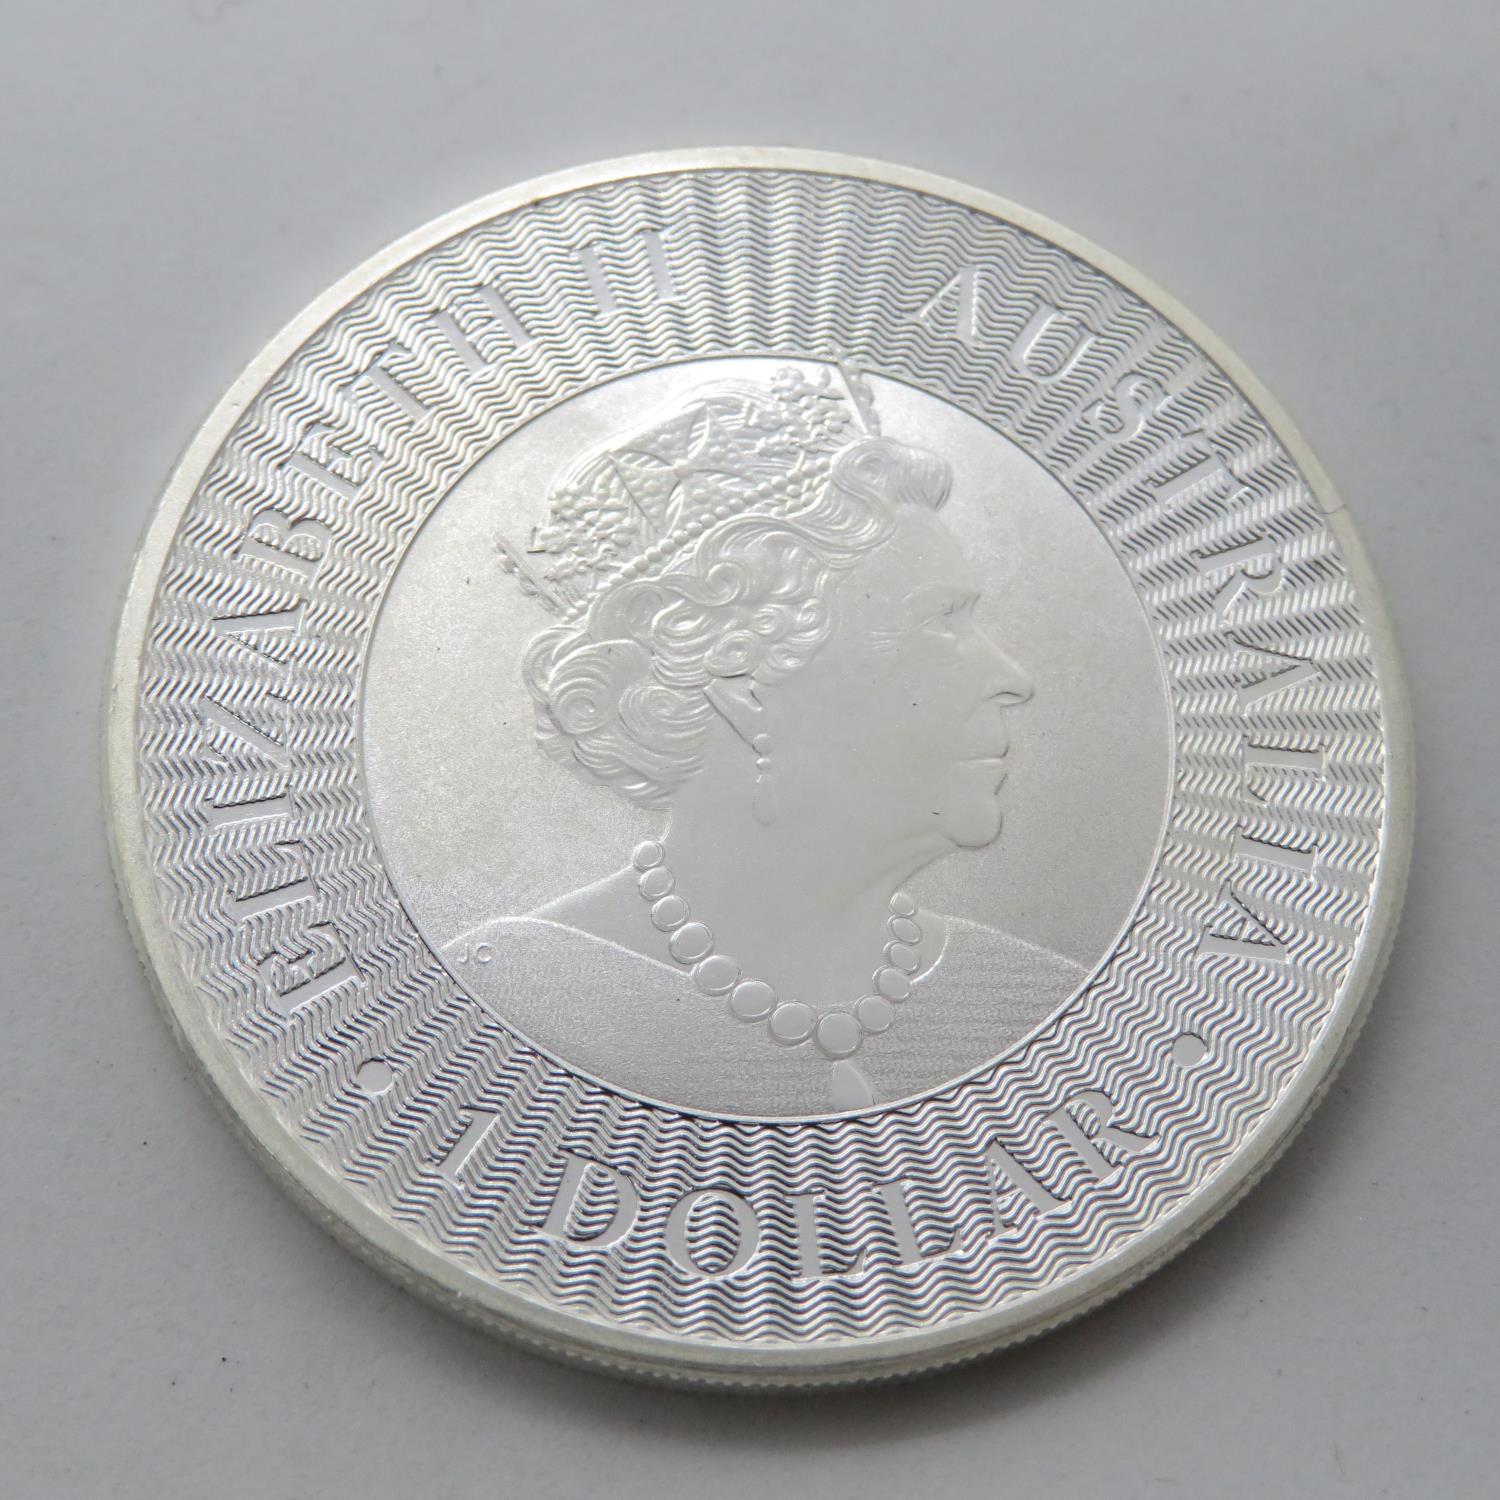 Australian Kangaroo 1oz 999 2020 silver coin - Image 2 of 2